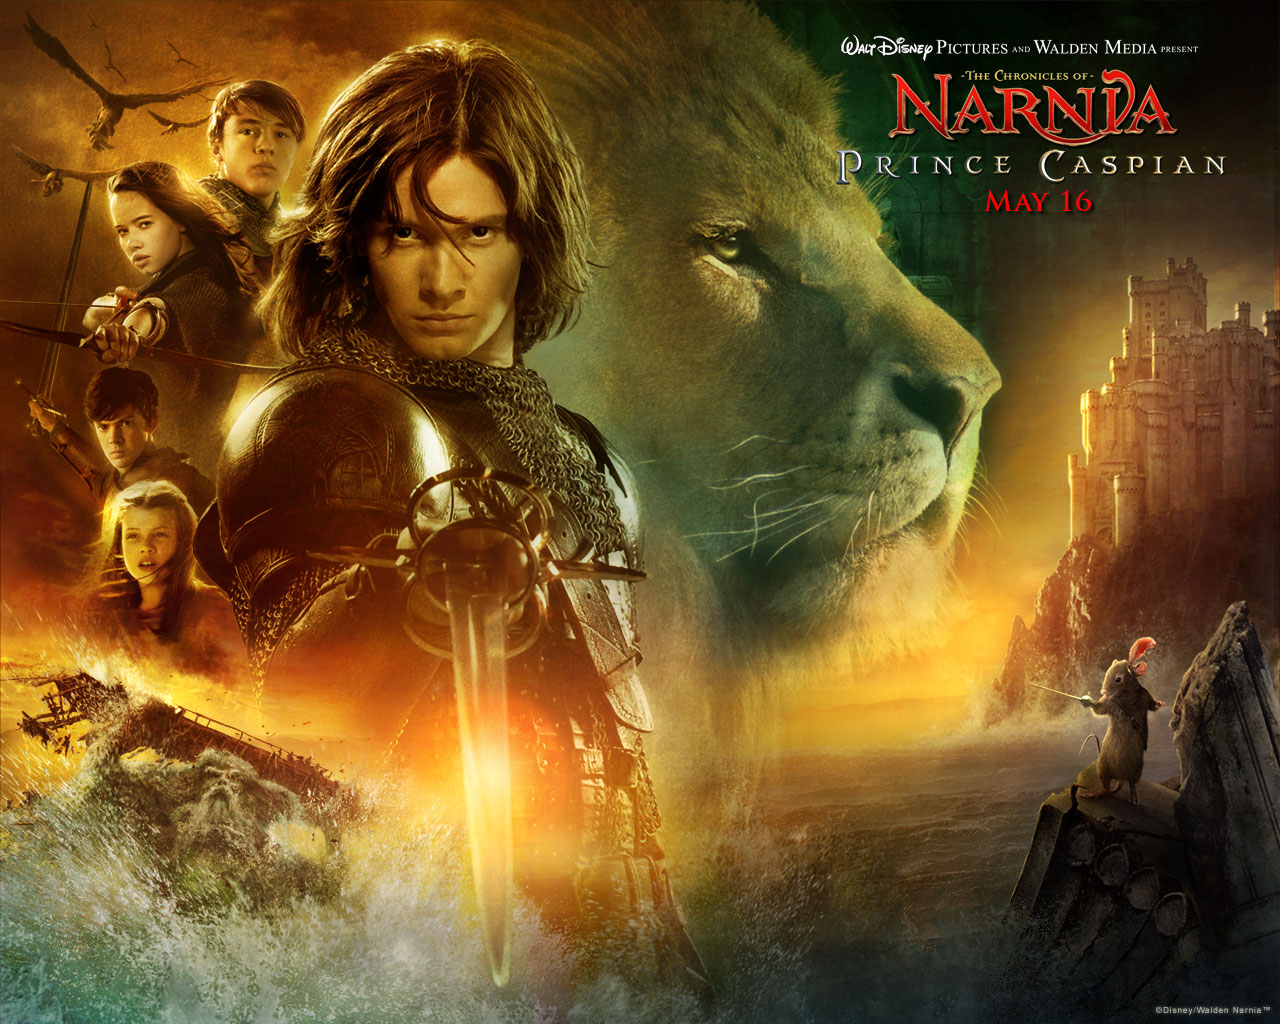 "The Chronicles of Narnia: Prince Caspian" desktop wallpaper (1280 x 1024 pixels)